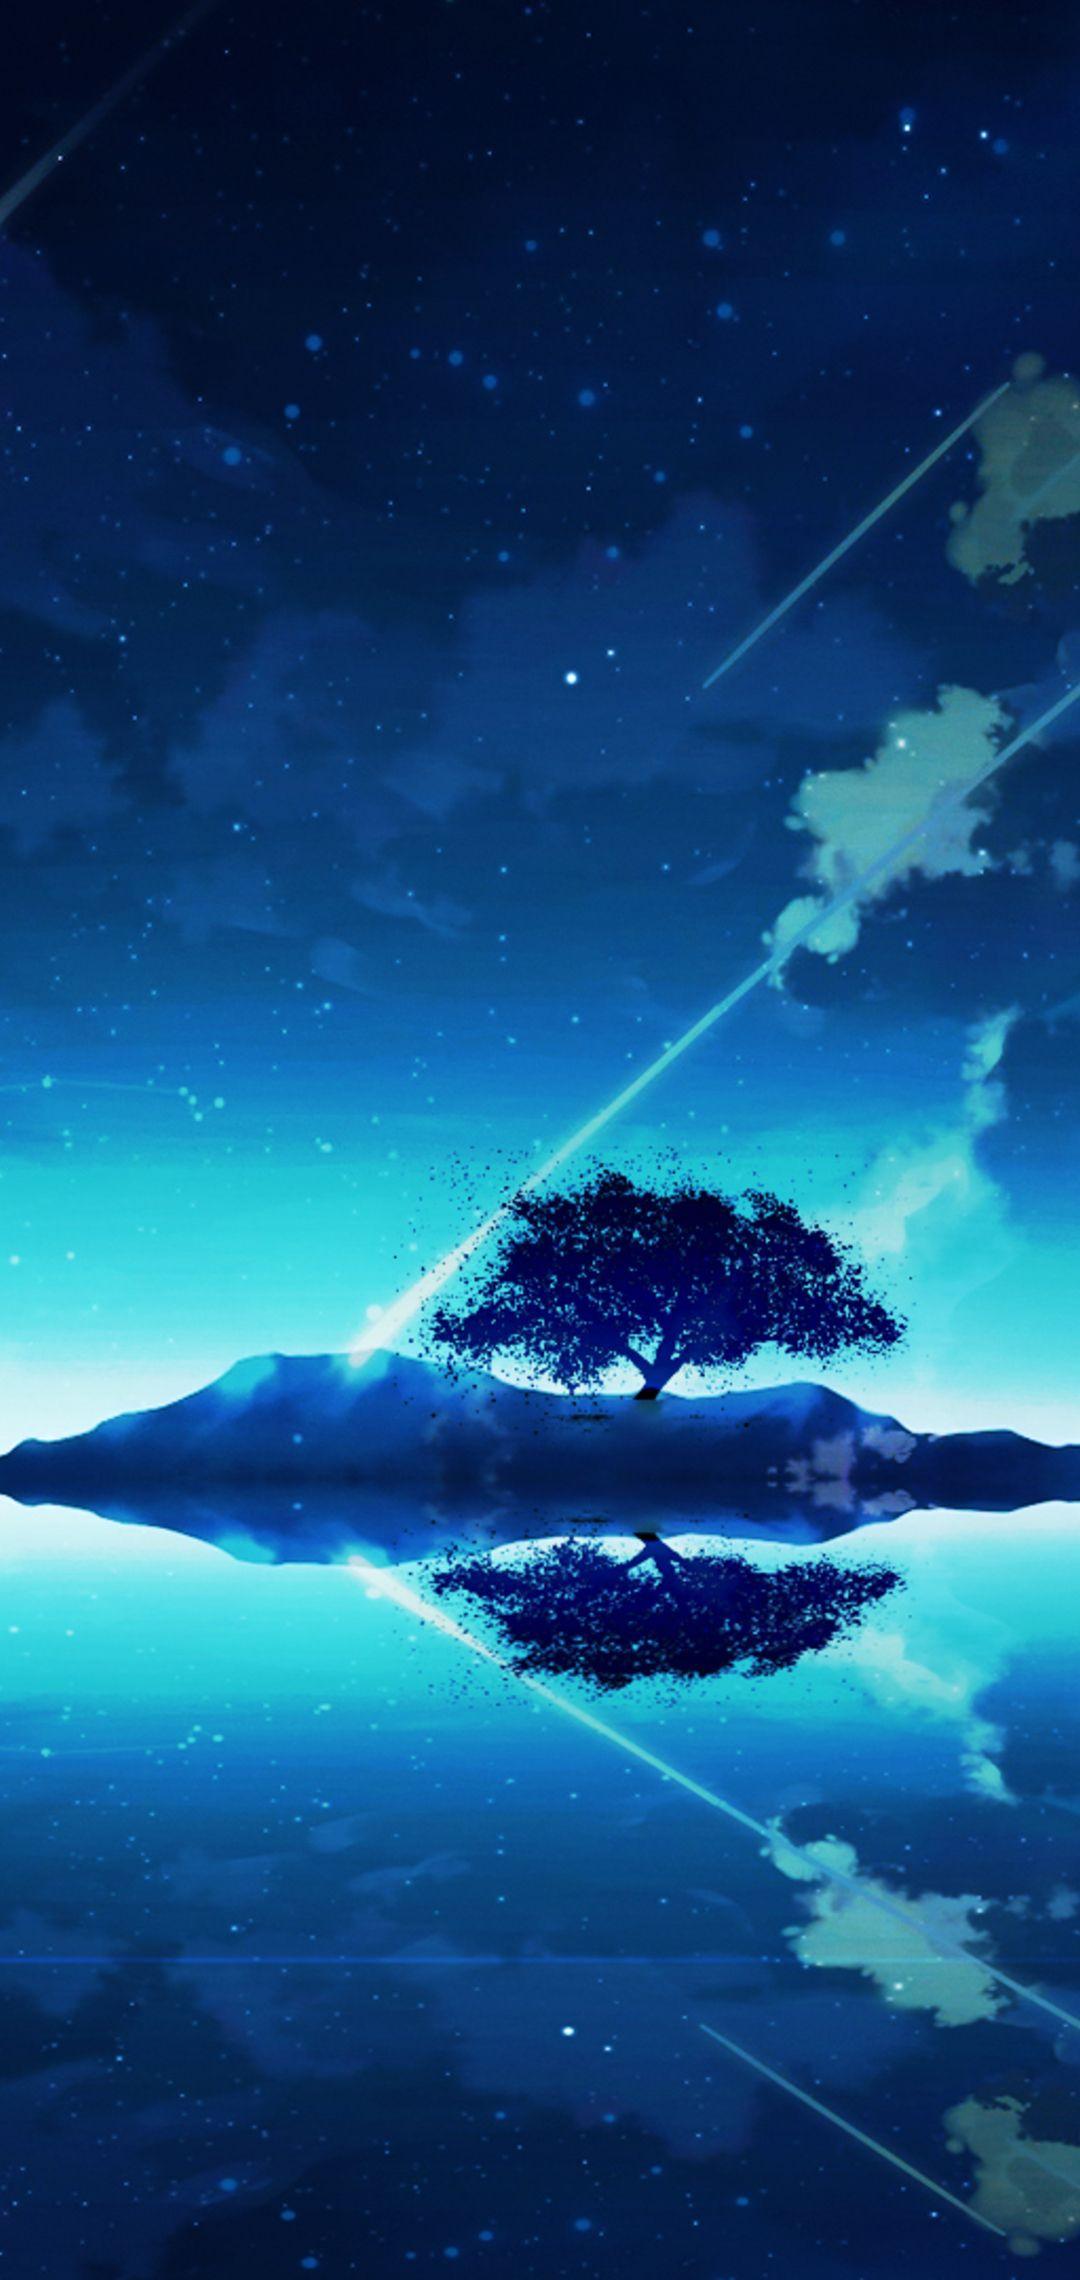 1080x2280 Tree On Mountain Anime One Plus 6, Huawei p20, Honor